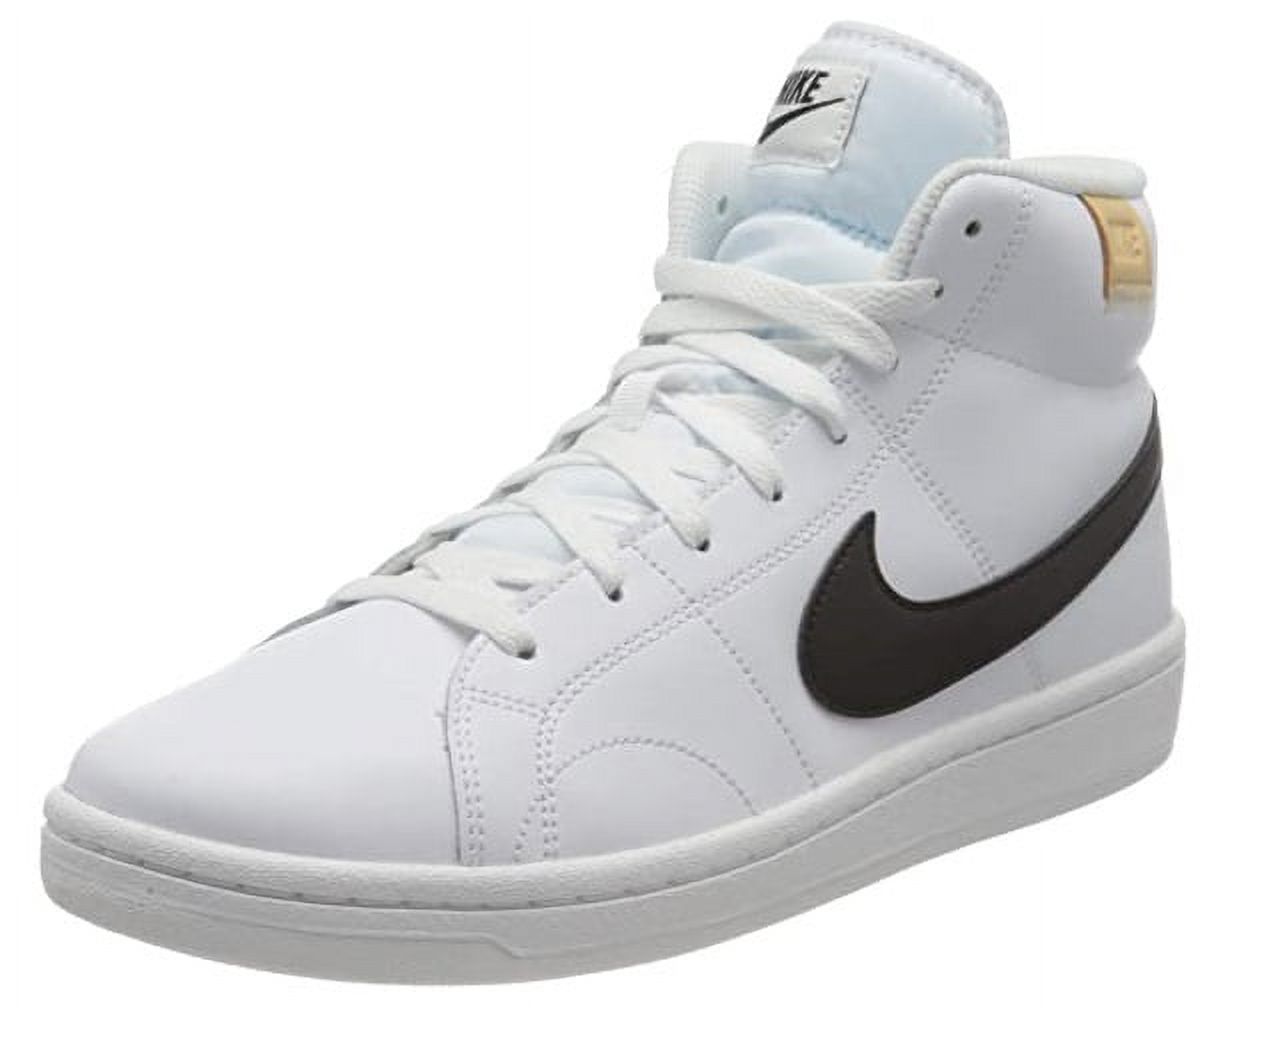 Nike Men's Tennis Shoe, White Black White Onyx, 8 - image 1 of 2